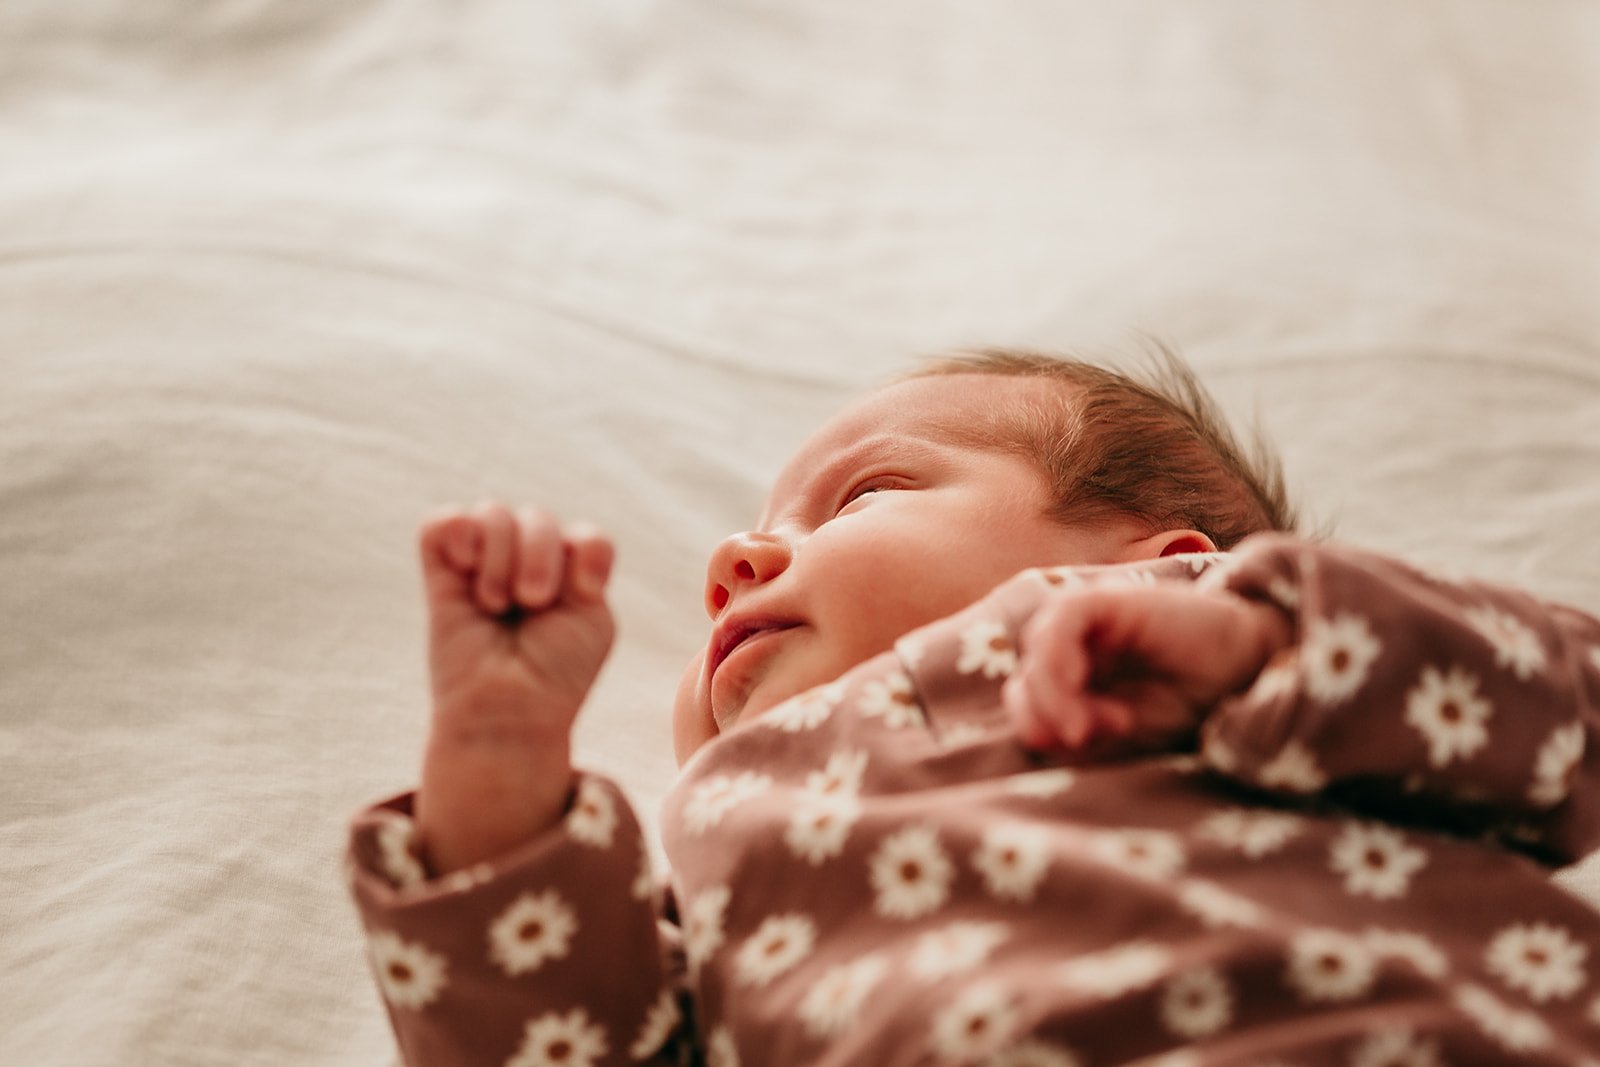 newborn-peacefully-rest-on-bed.jpg